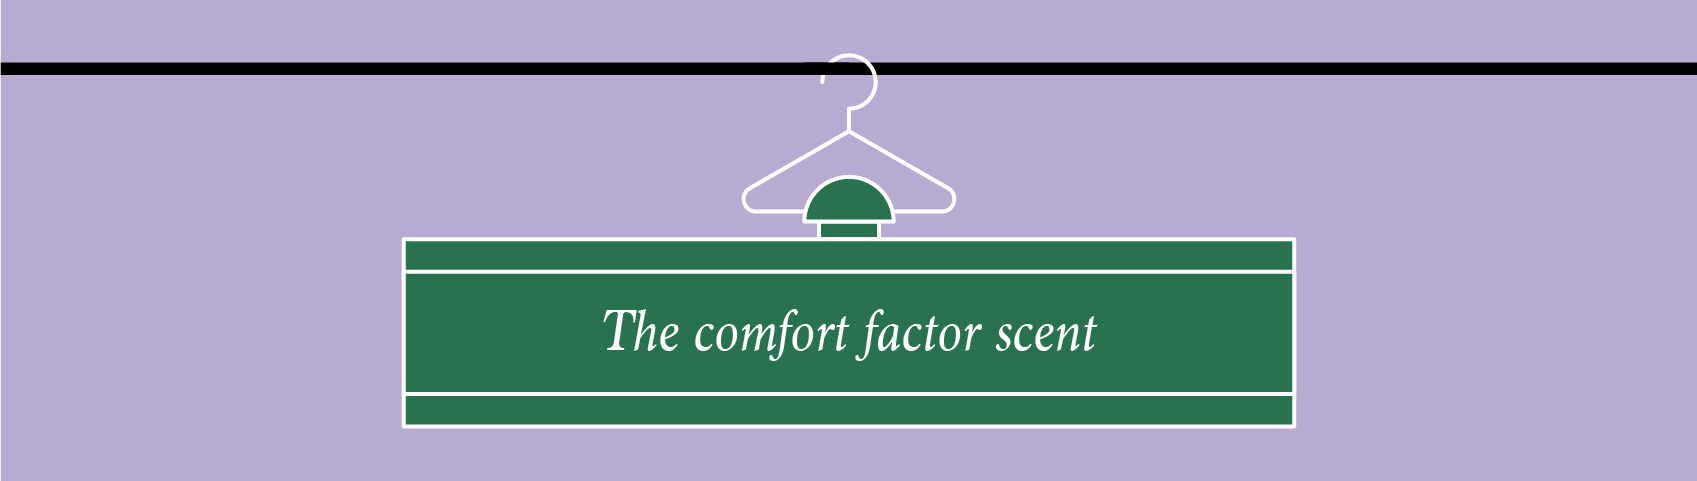 illustration of perfume bottle on a coat hanger the comfort factor scent